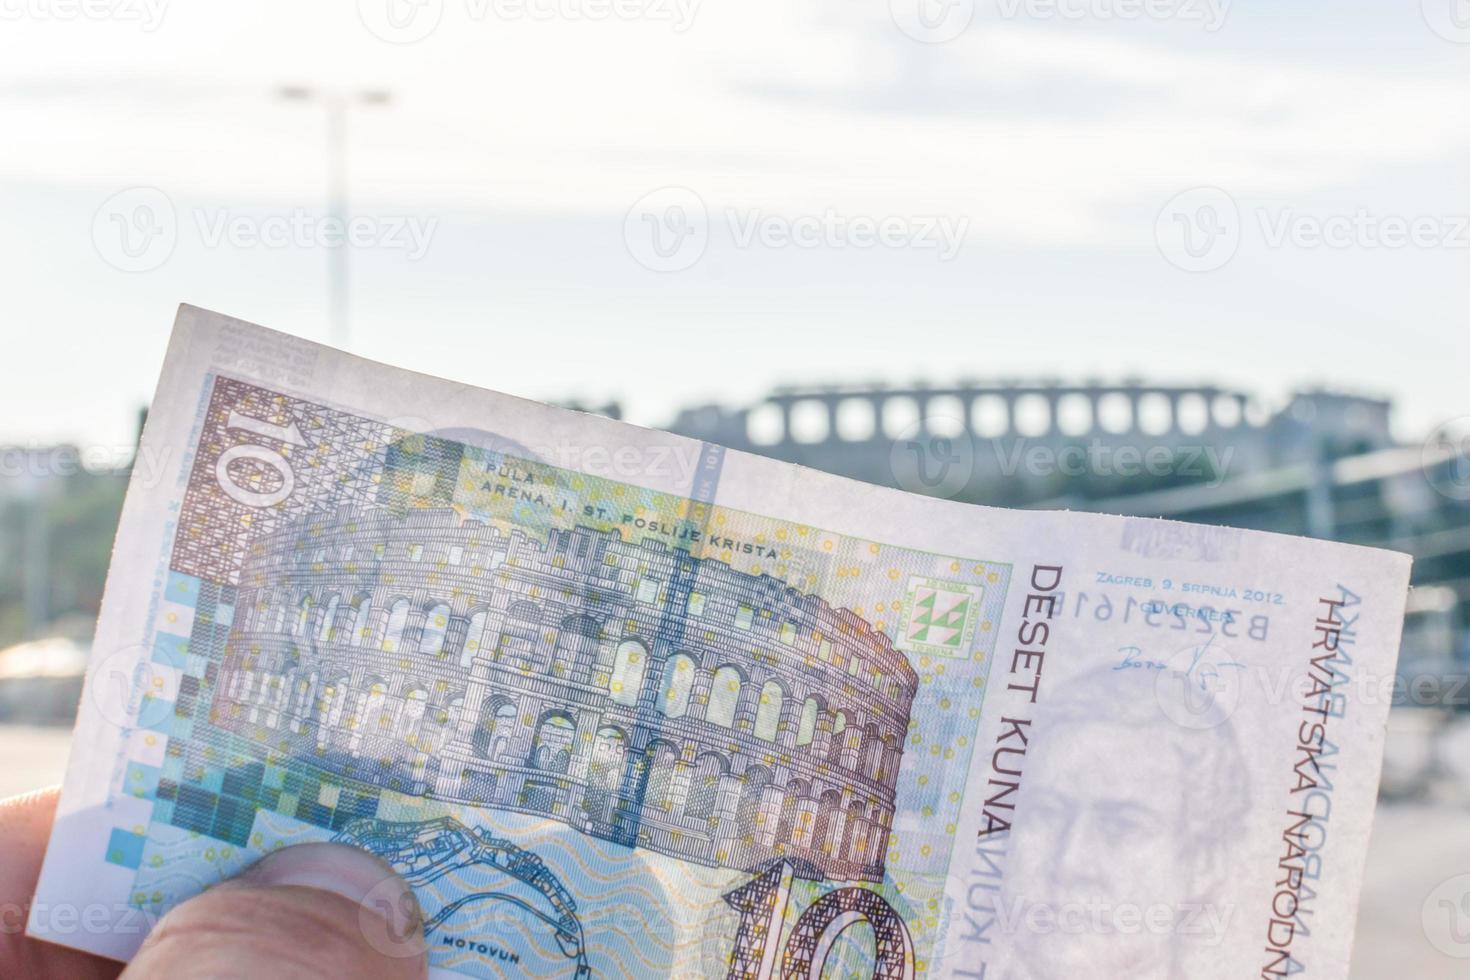 croatian money note in hand photo